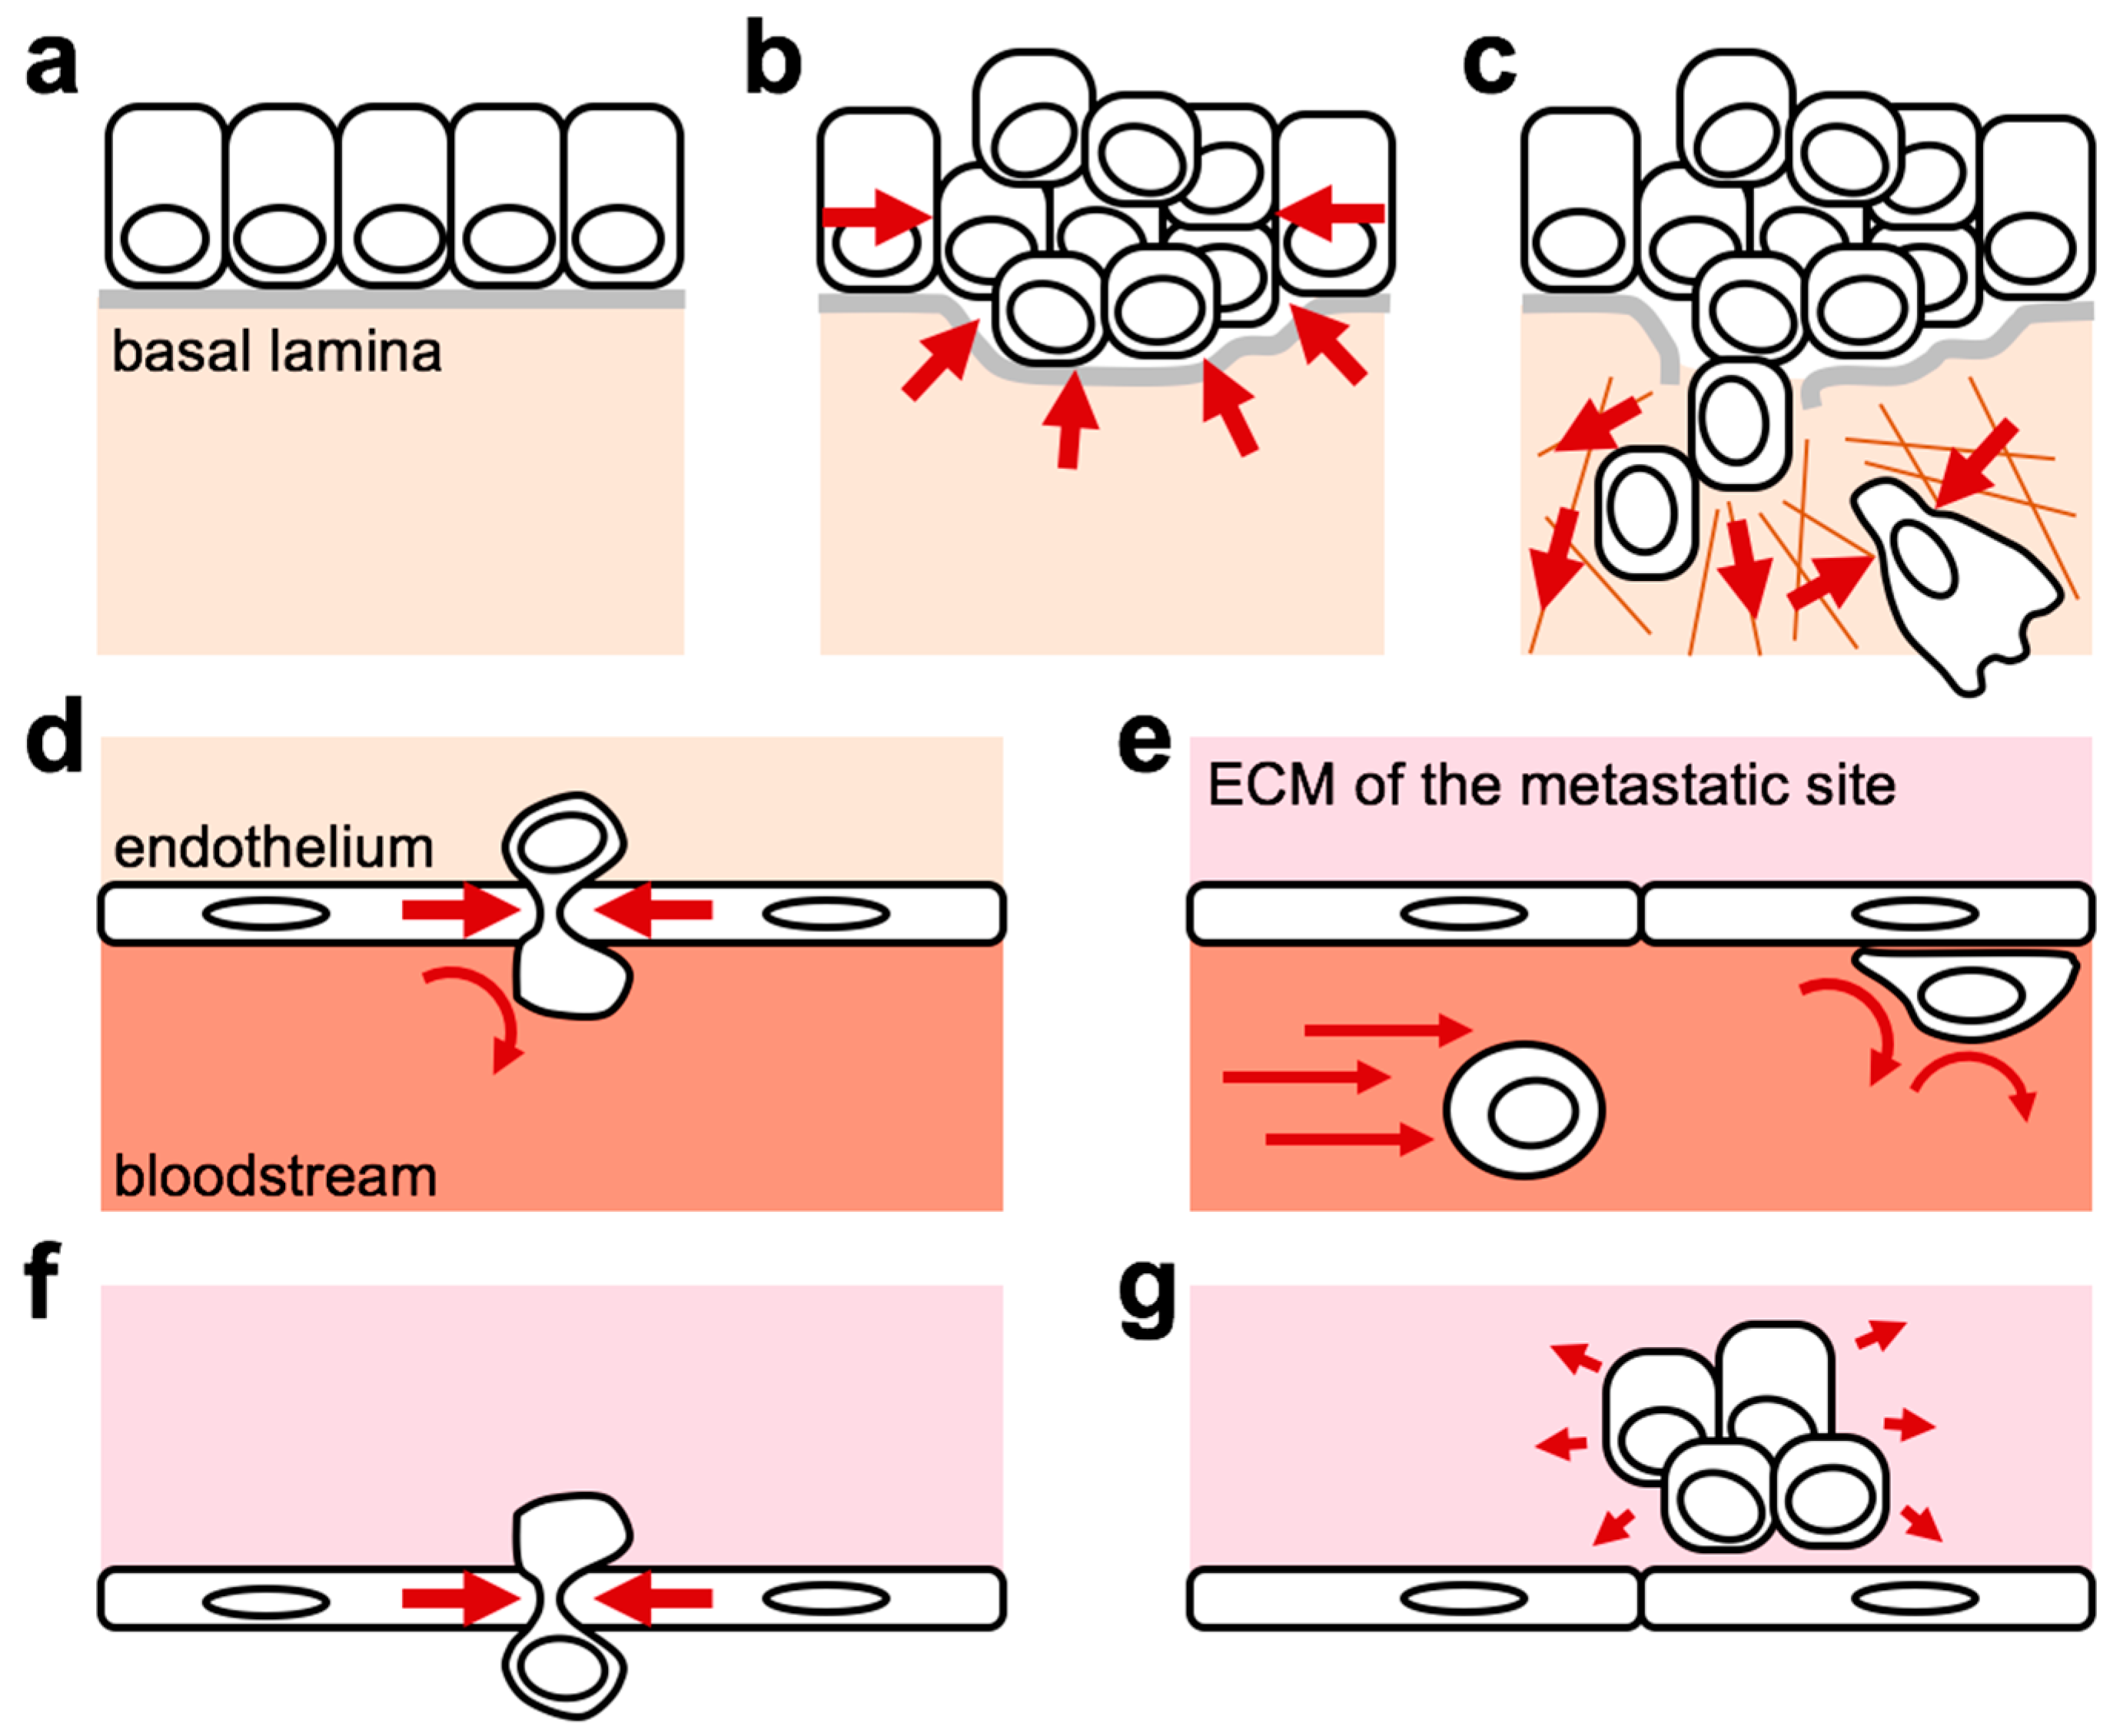 Basement membrane stiffness determines metastases formation